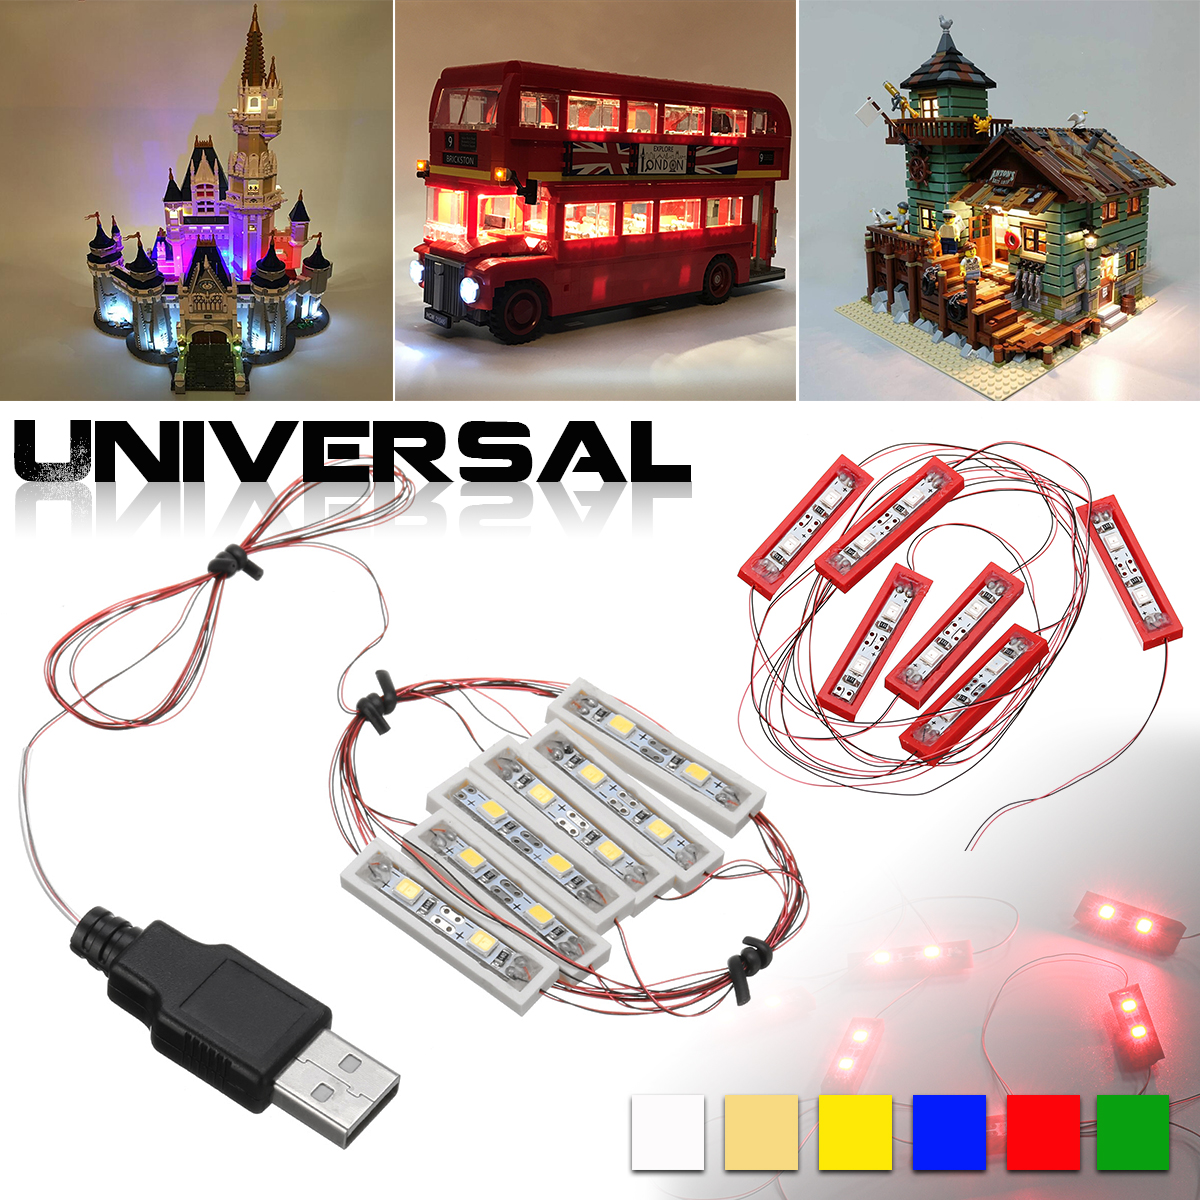 Universal-DIY-LED-Light-Brick-Kit-For-Lego-MOC-Toys-USB-Port-Blocks-Accessories-Decor-1444426-8